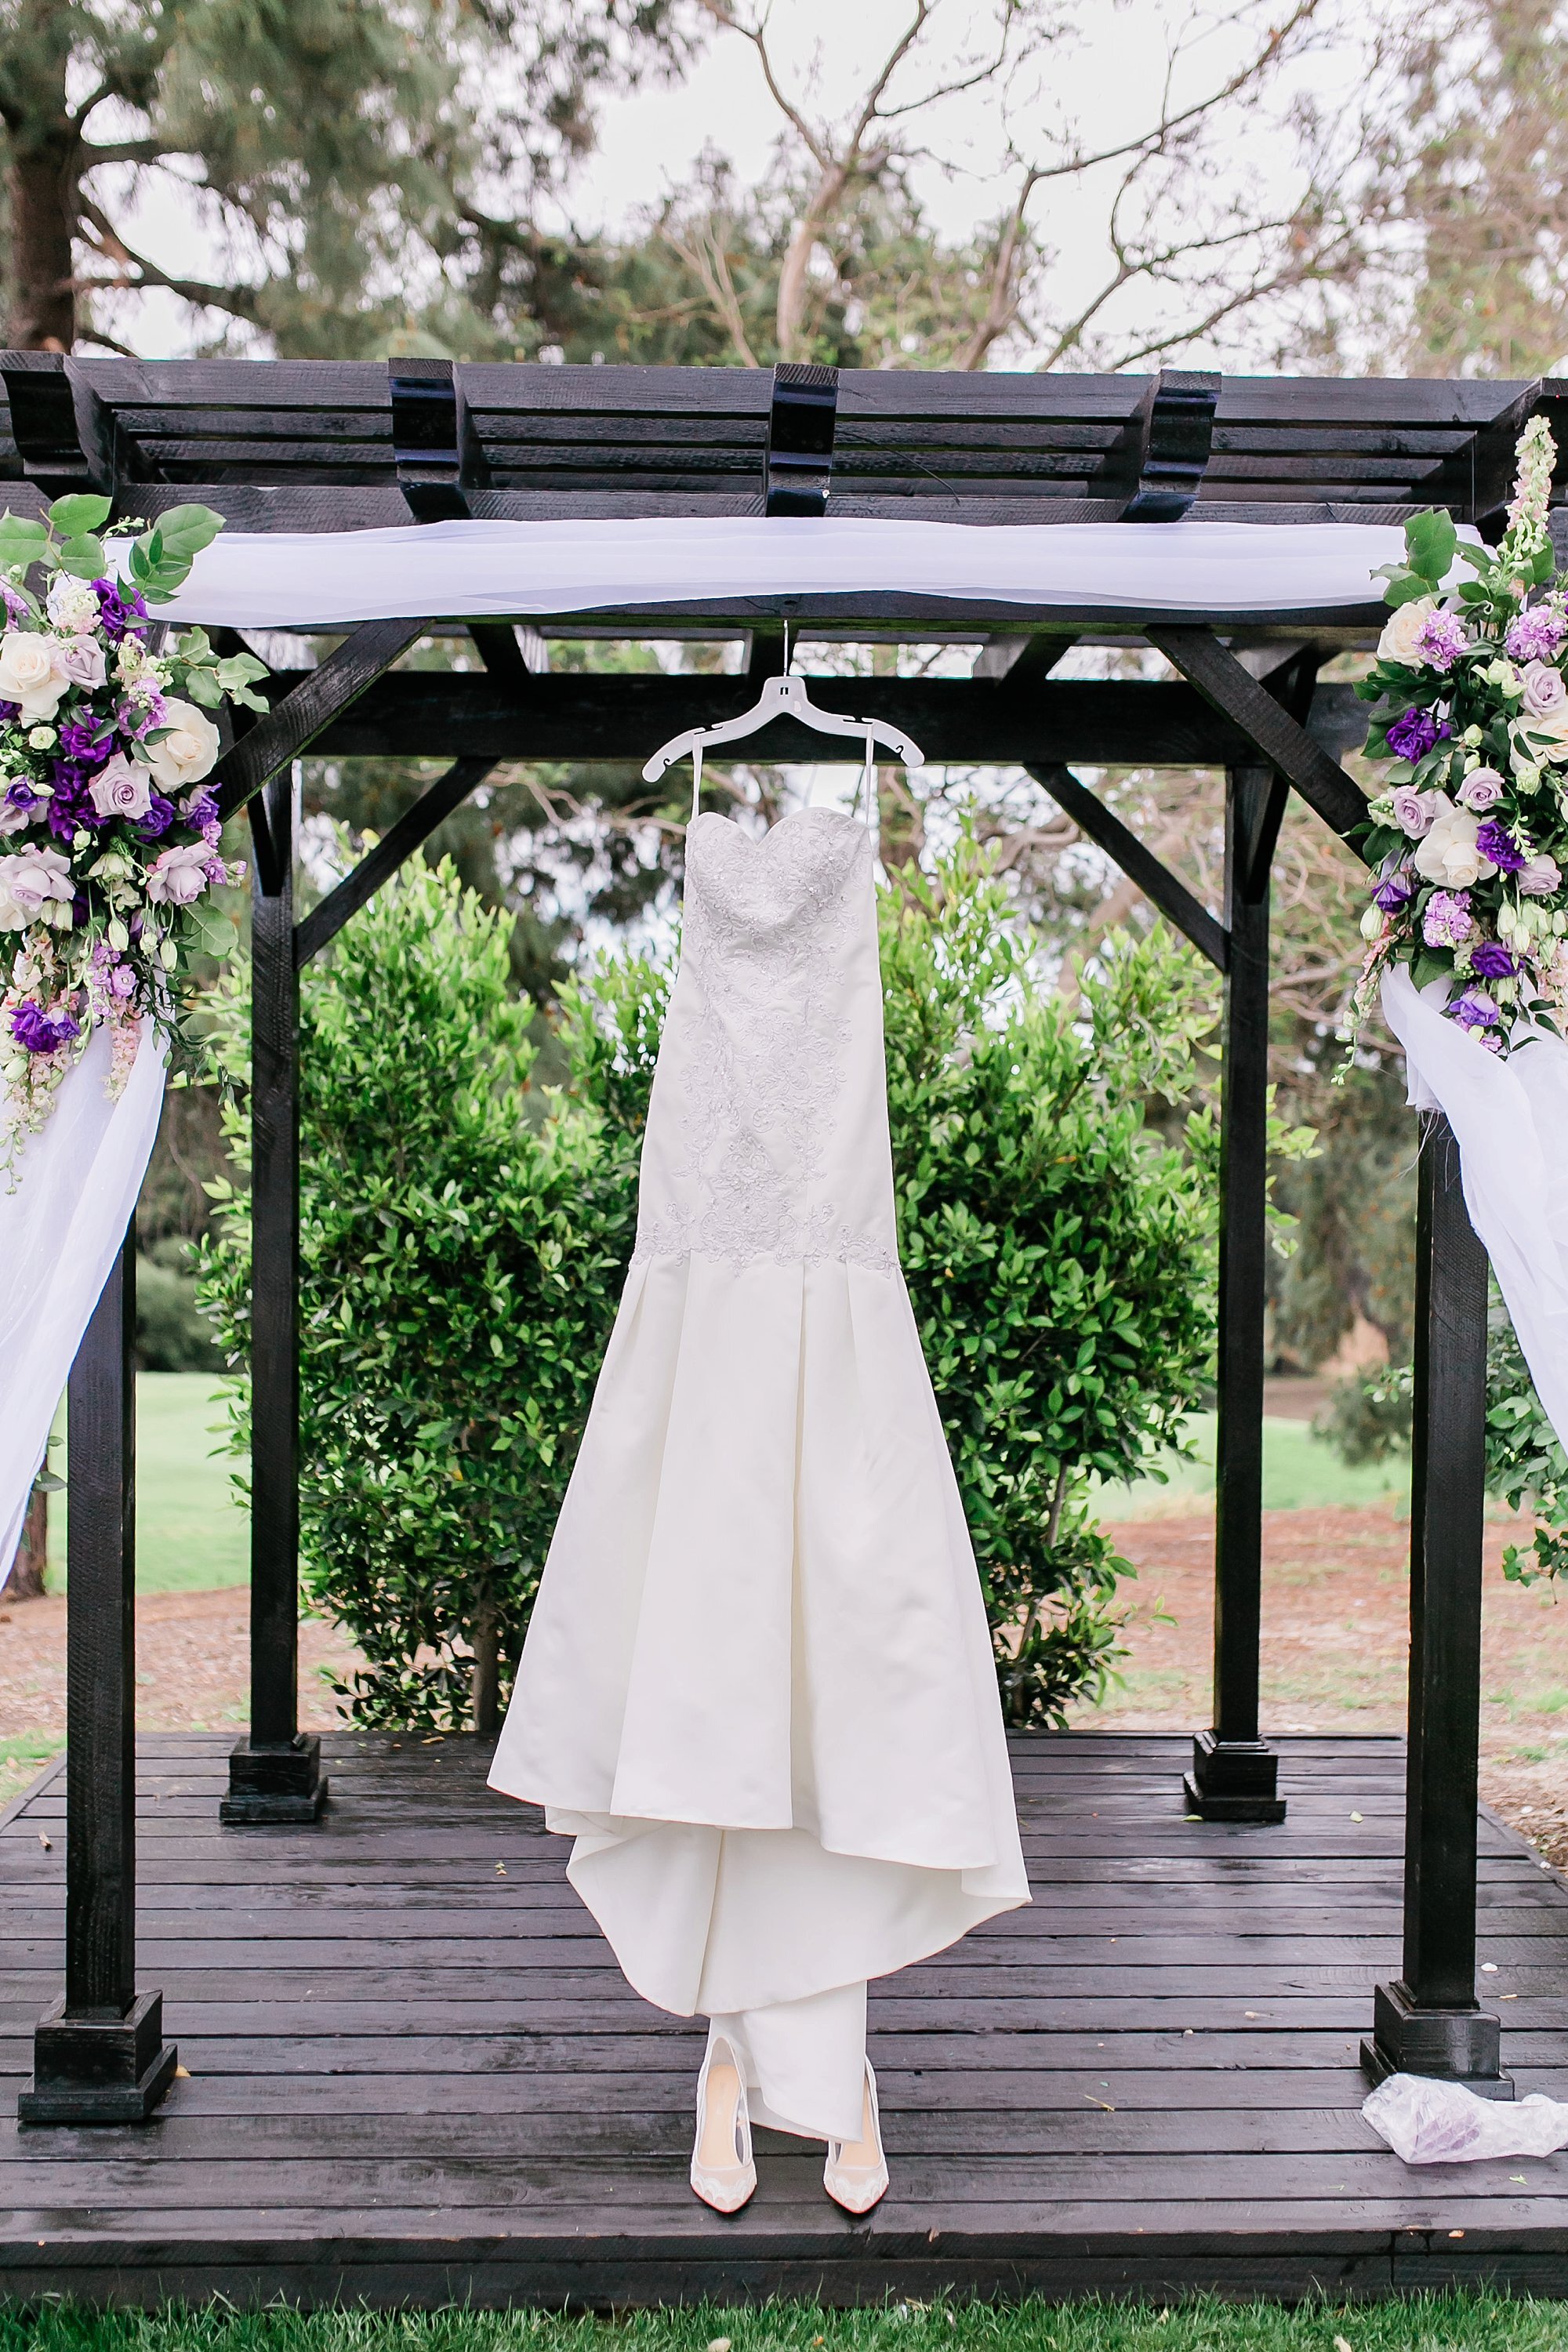  bride’s gown hanging 